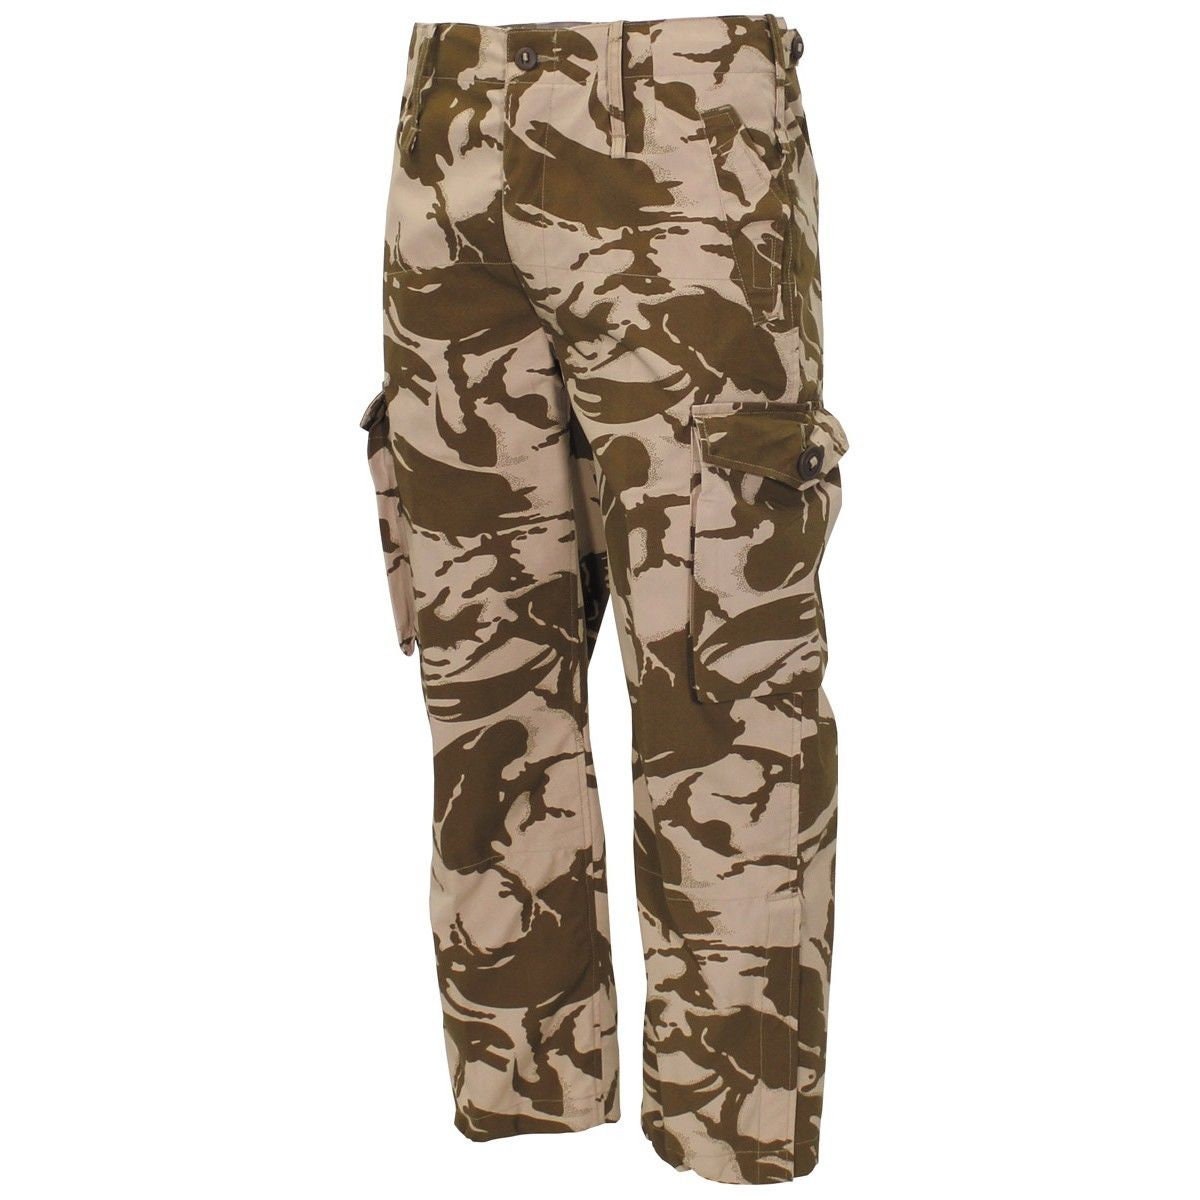 Genuine British army combat trousers Desert military pants windproof NEW